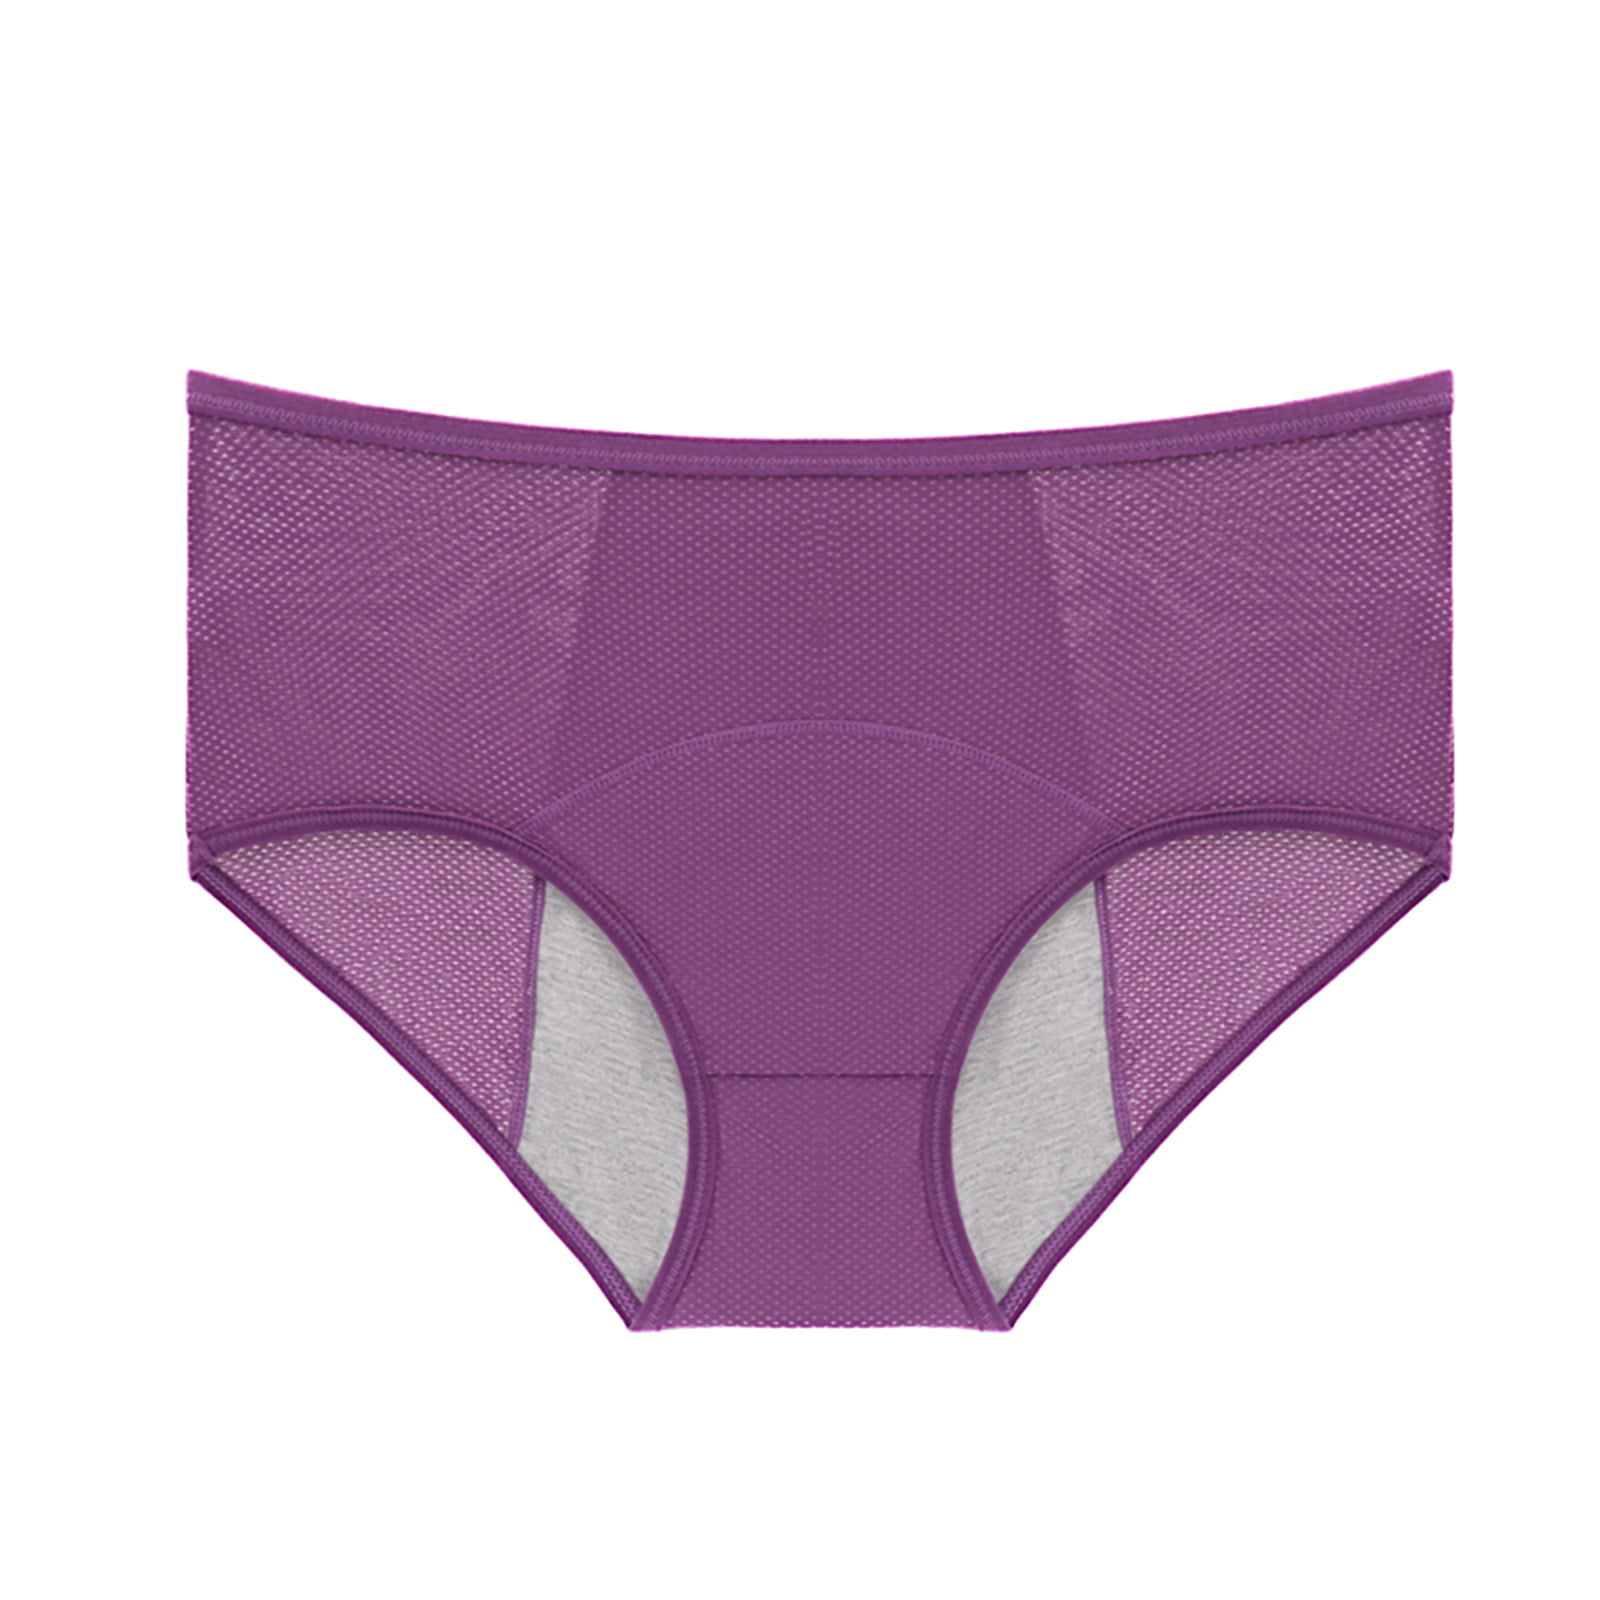 Aayomet Panties For Women Womens Underwear Cotton Bikini Panties Lace Soft  Hipster Panty Ladies Stretch Full Briefs,Purple XL 